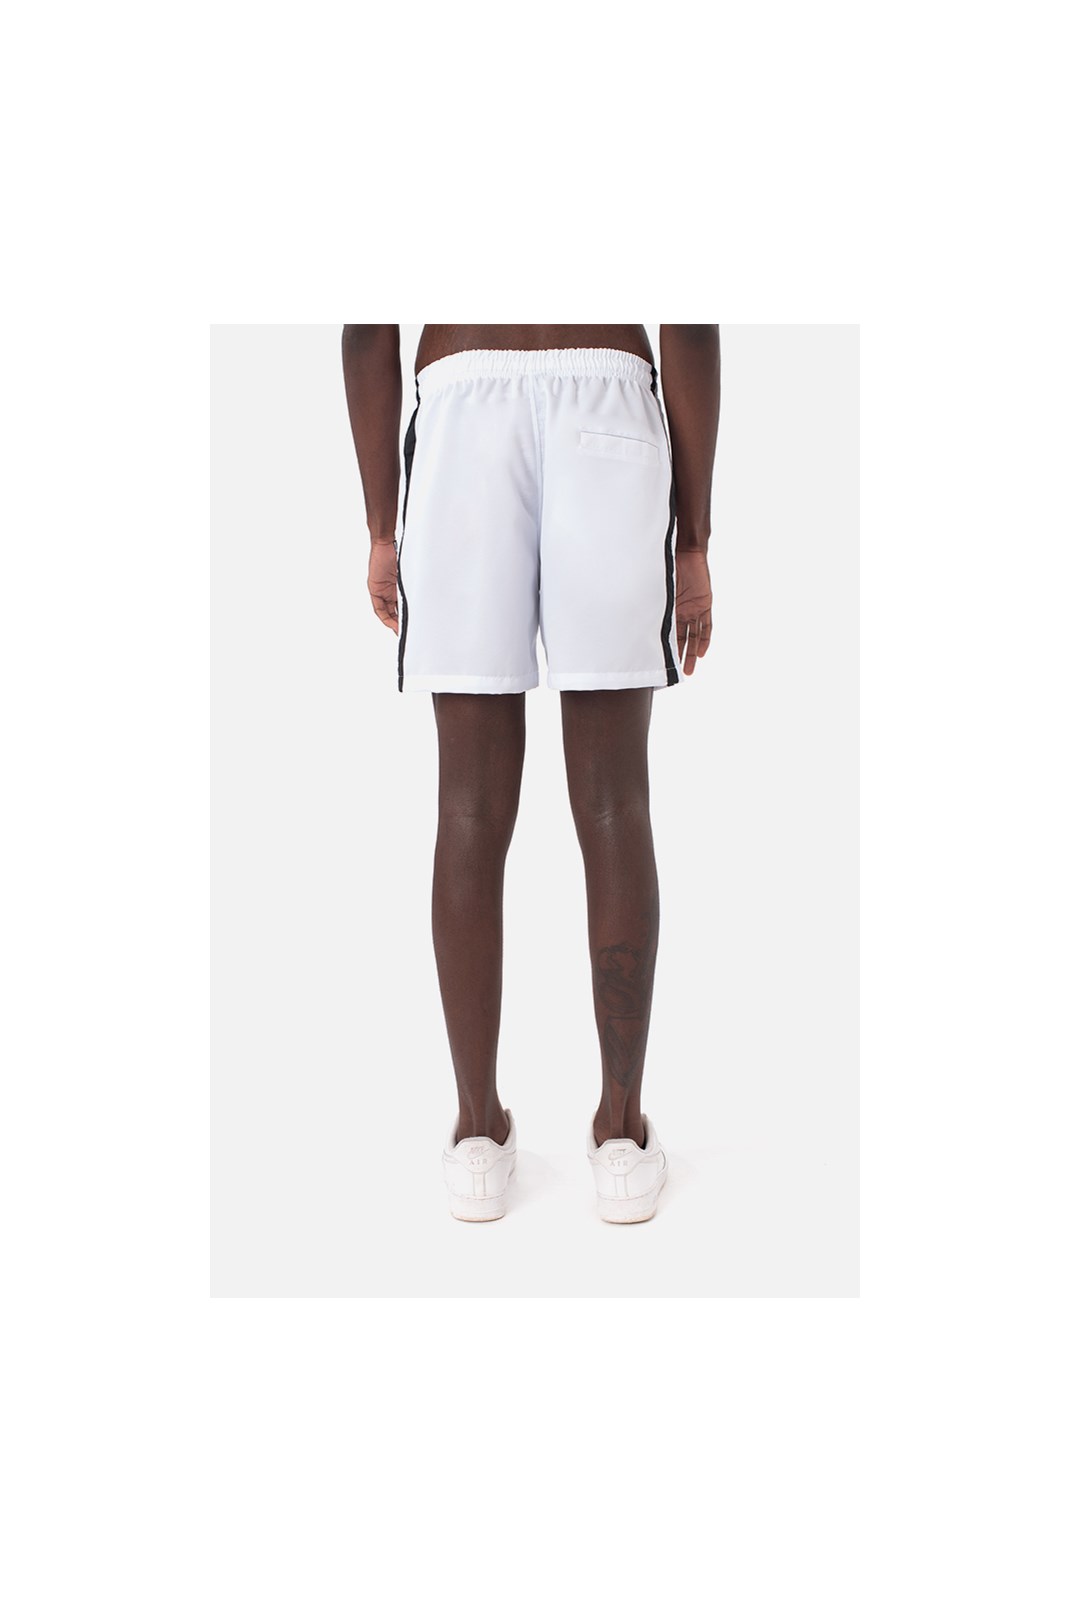 Shorts Approve Classic Branco V2